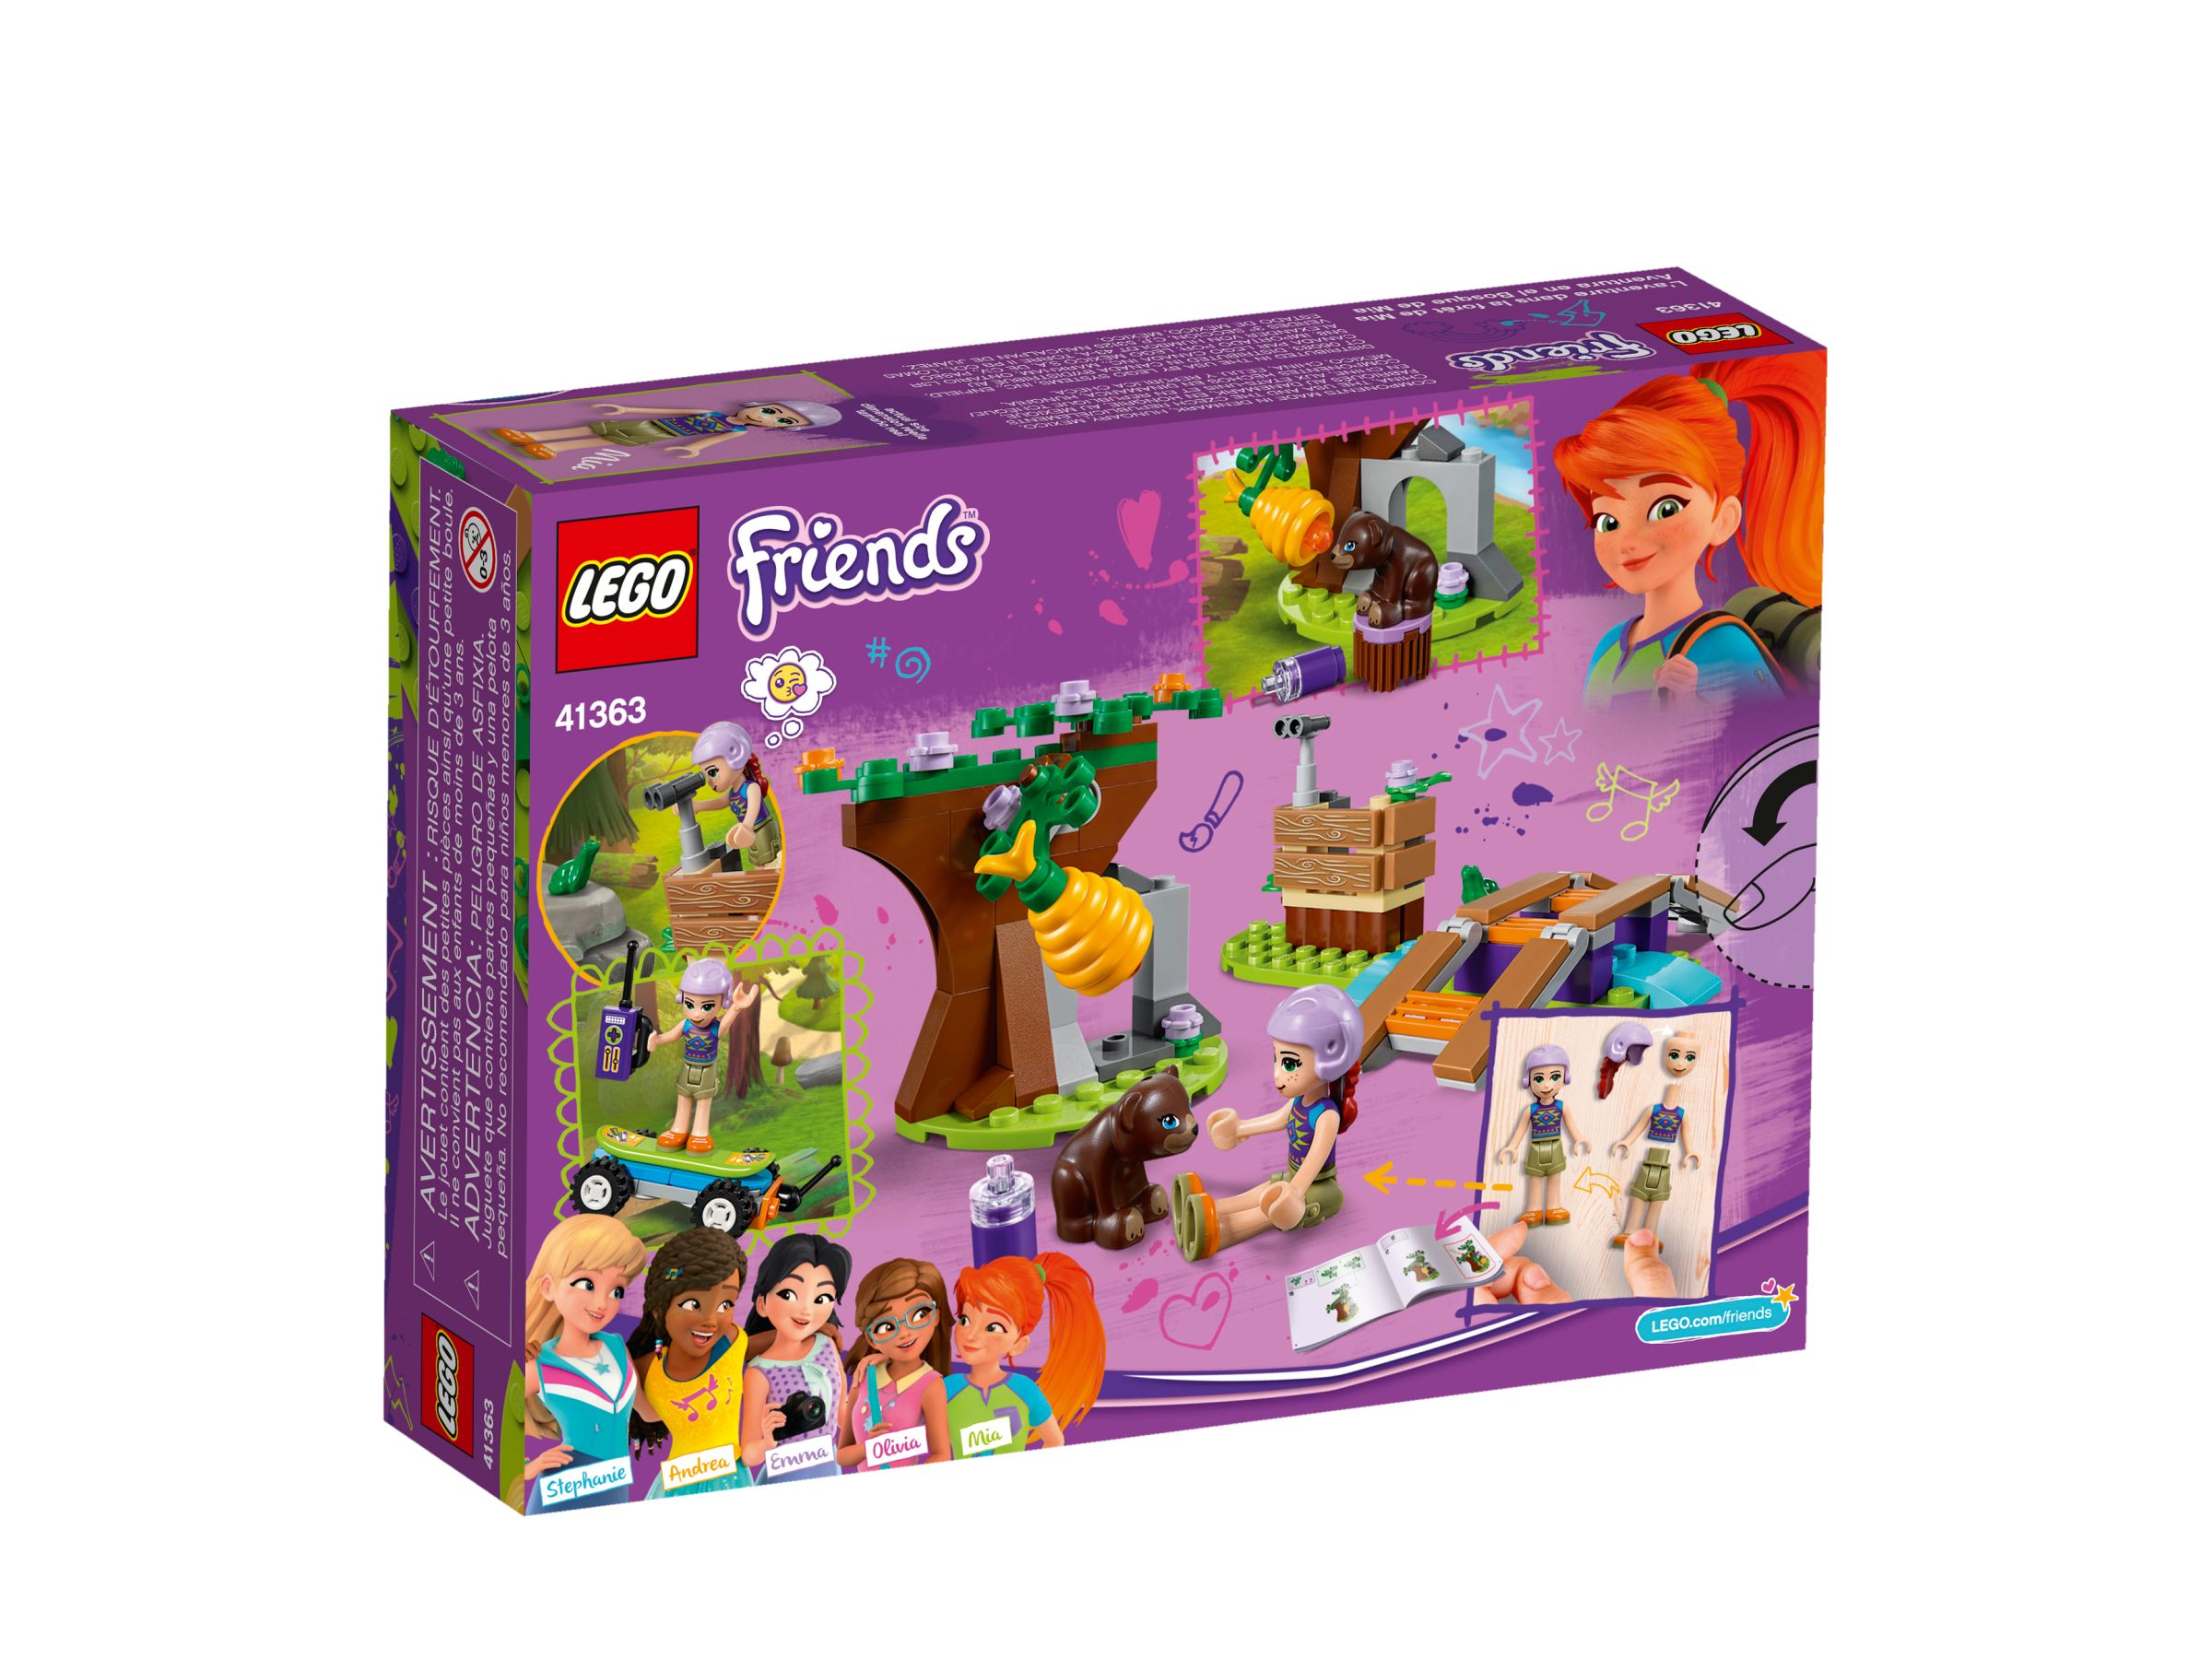 LEGO Friends 41363 Mias Outdoor Abenteuer LEGO_41363_alt4.jpg